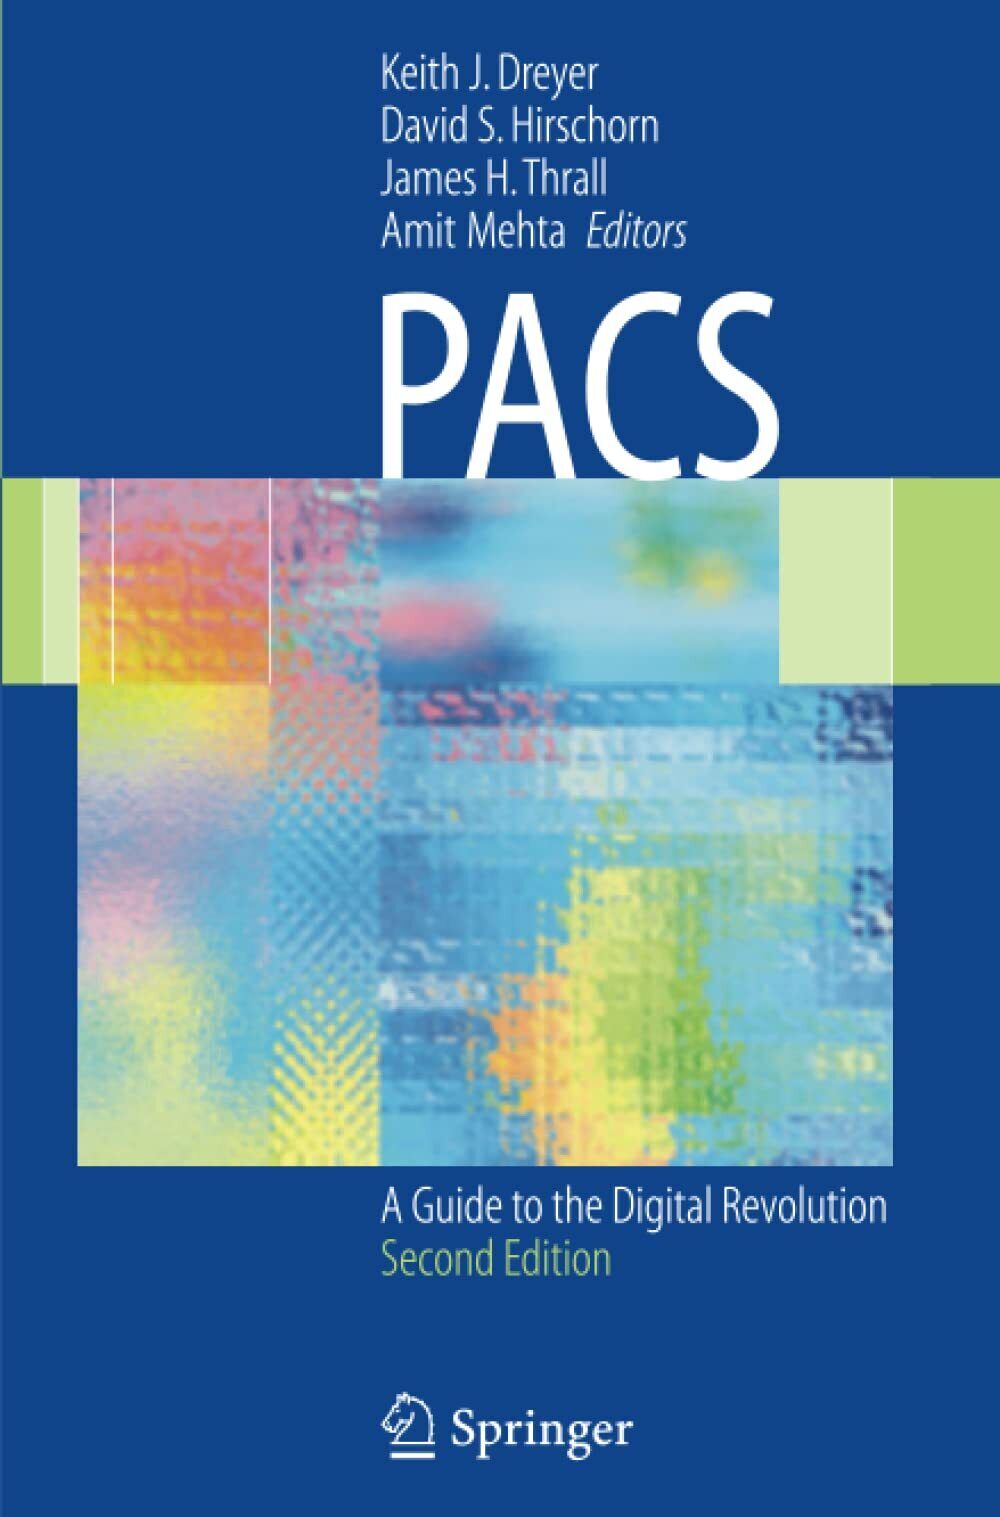 PACS: A Guide to the Digital Revolution - Keith J. Dreyer - Springer, 2010